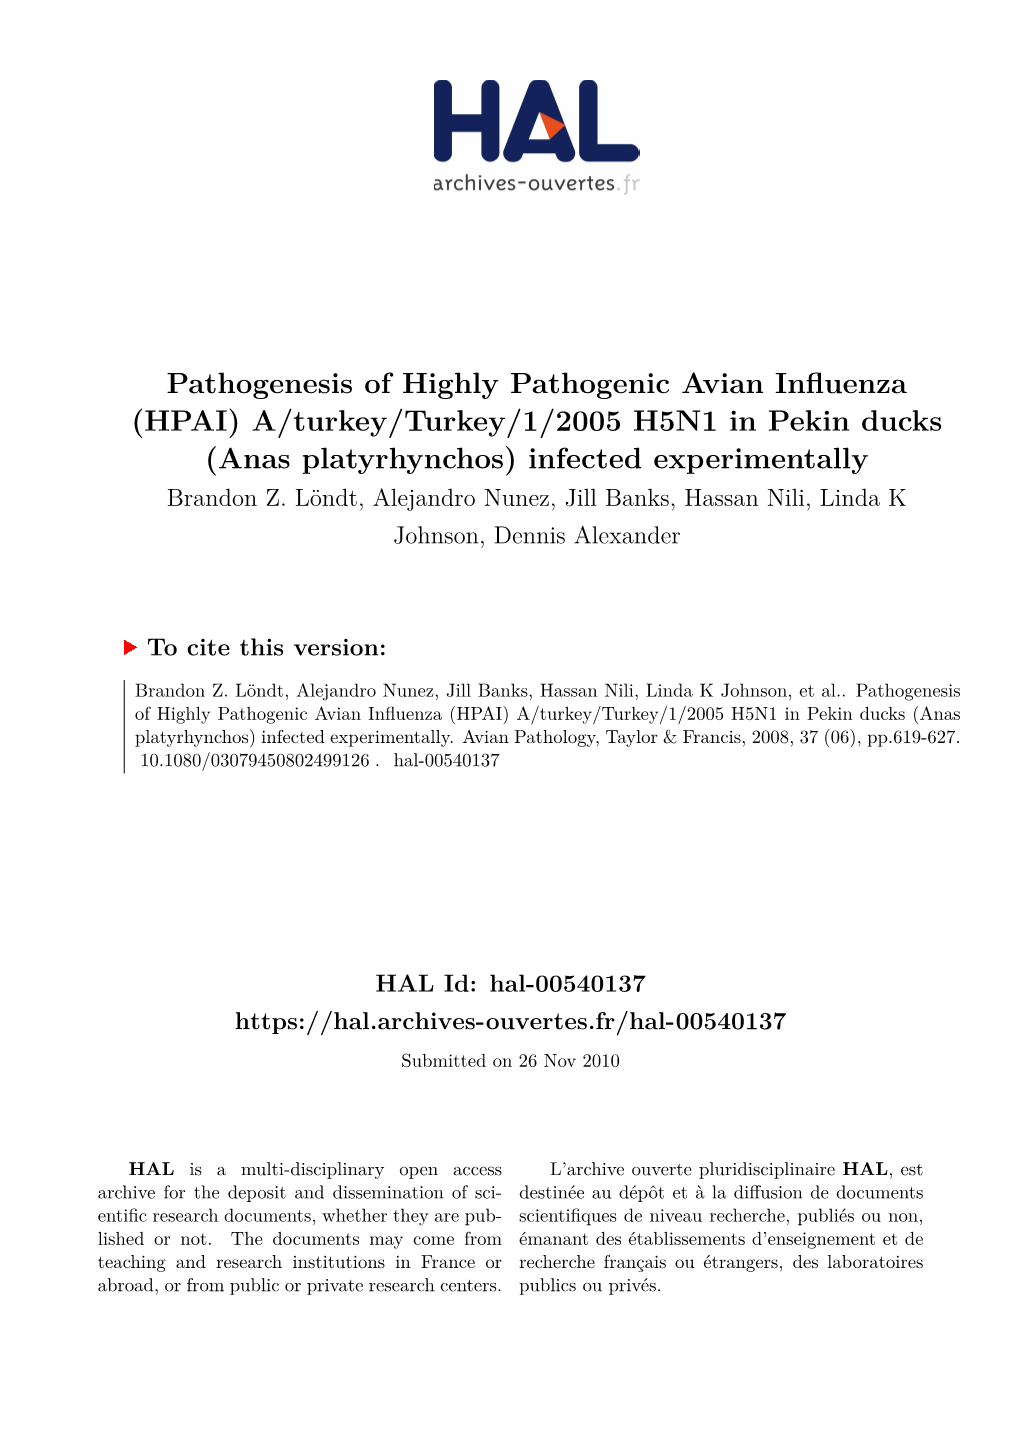 (HPAI) A/Turkey/Turkey/1/2005 H5N1 in Pekin Ducks (Anas Platyrhynchos) Infected Experimentally Brandon Z